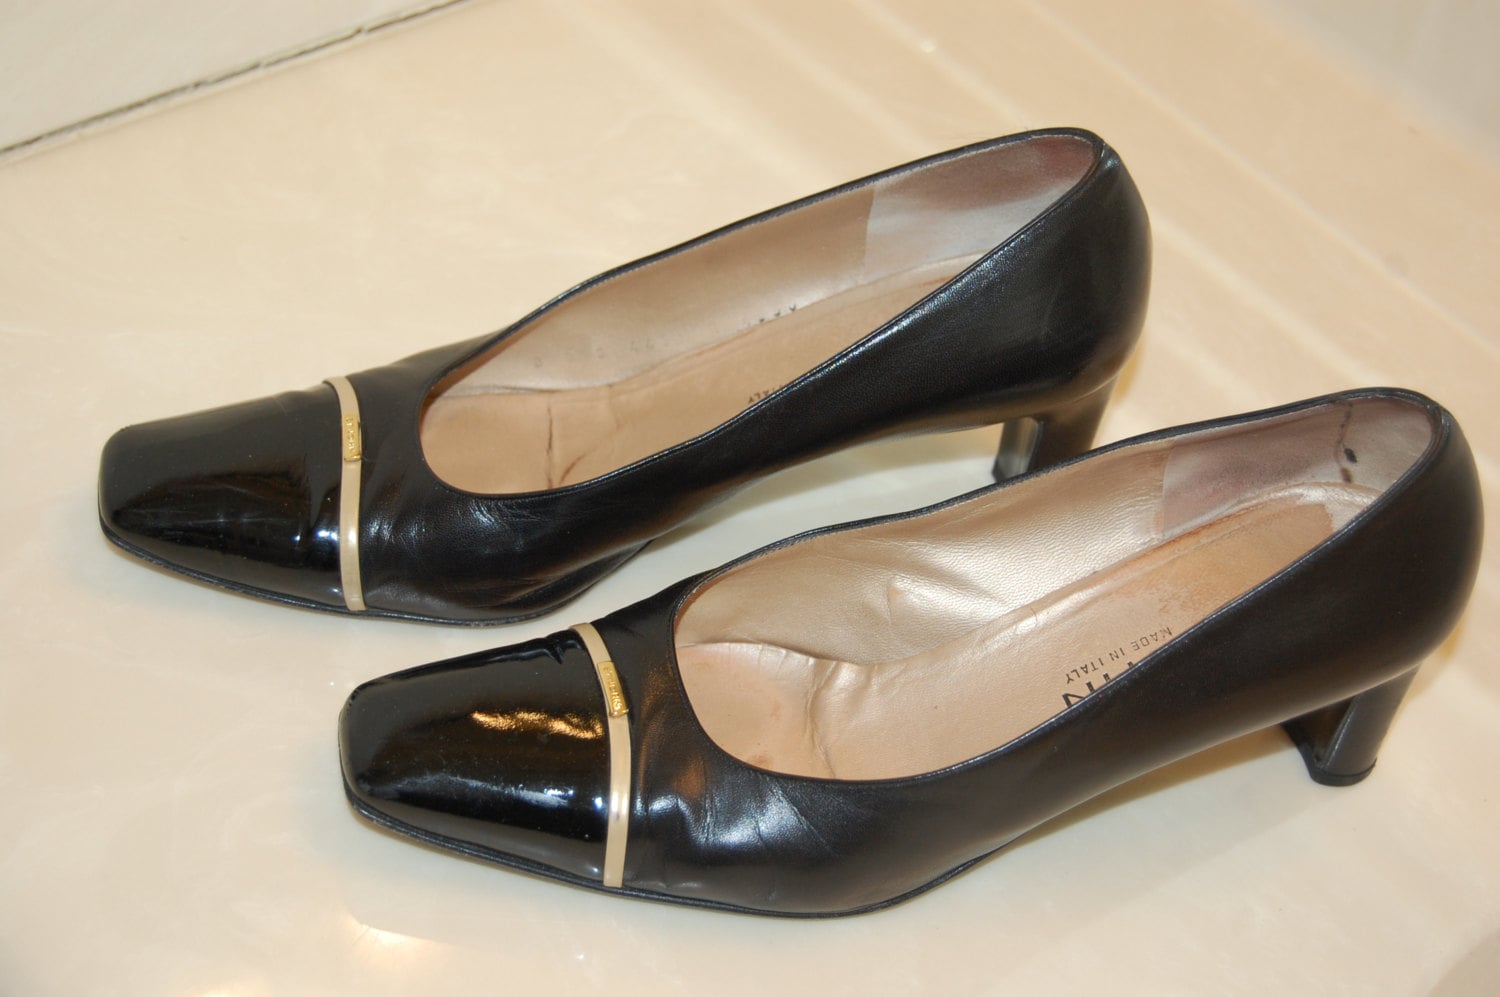 Authentic St. John pumps / 80s designer vintage heels / Size 8 B Black